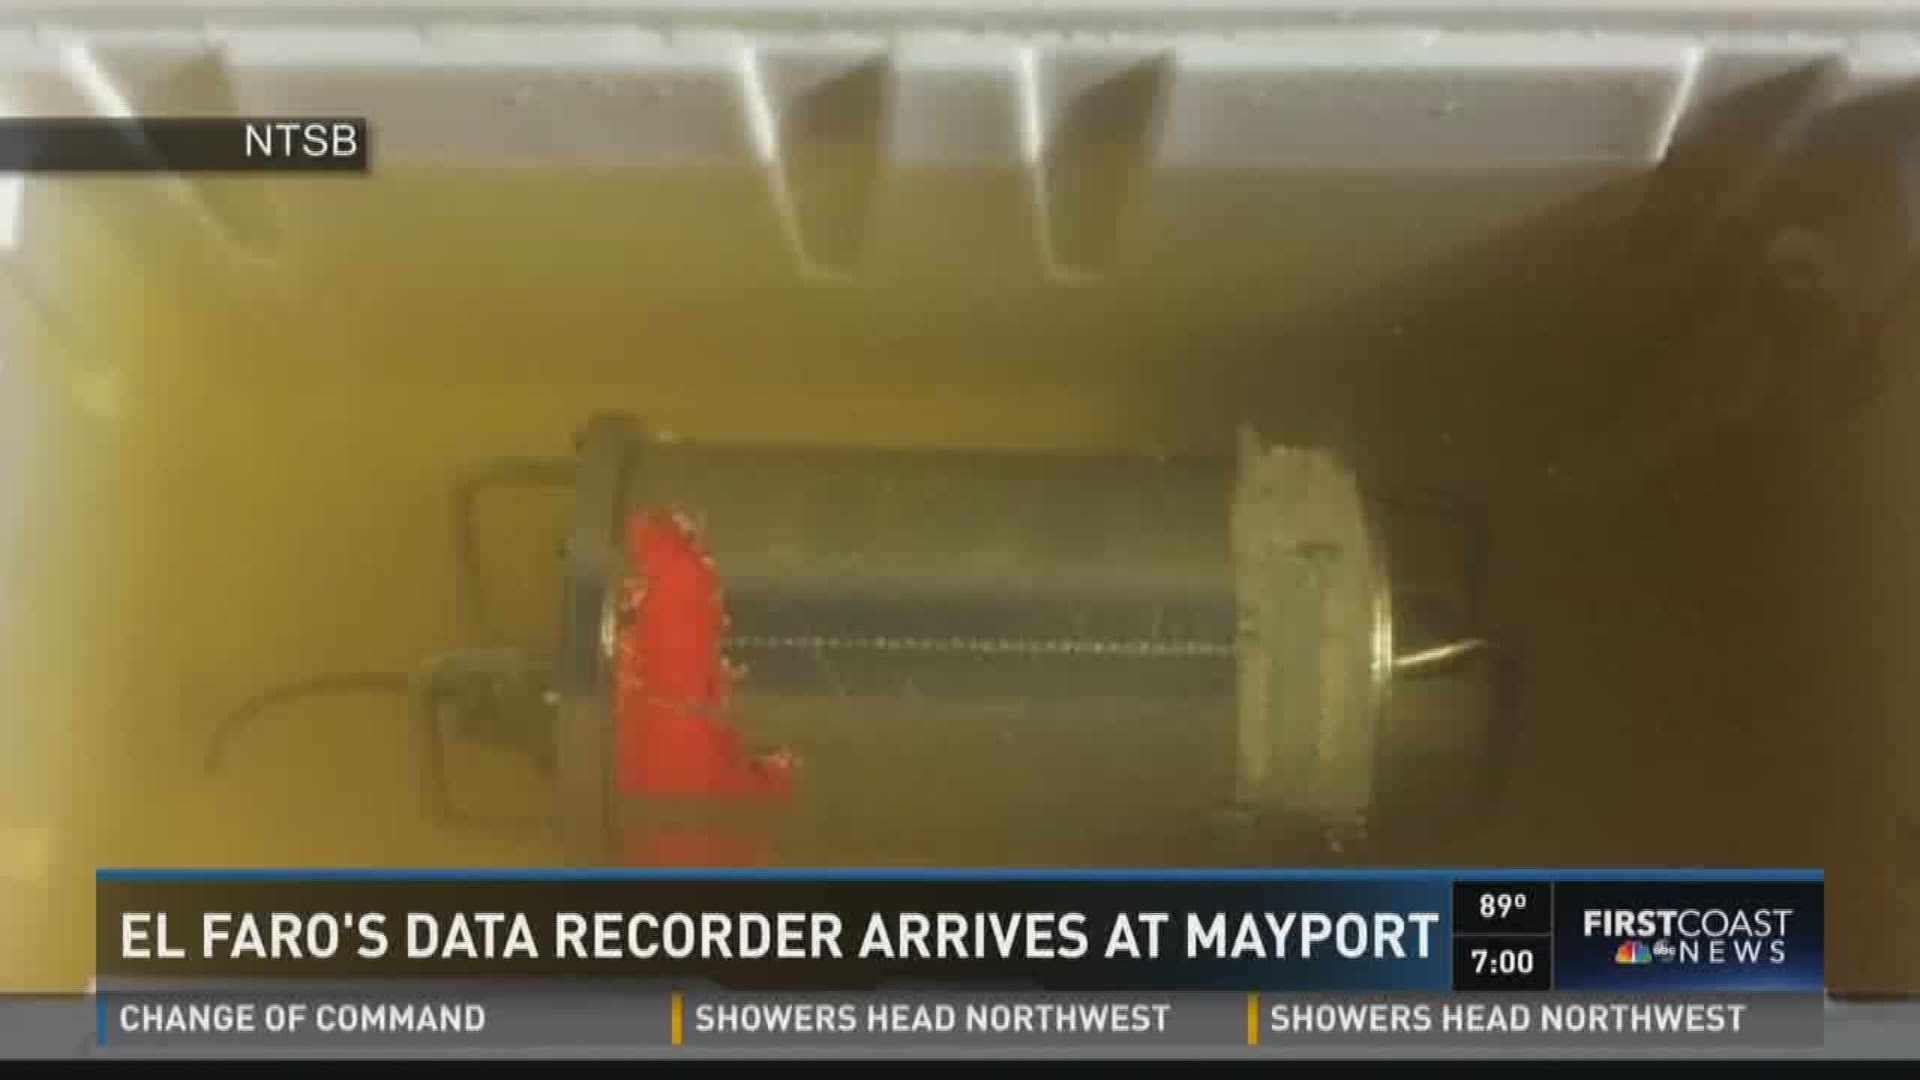 El Faro's data recorder arrives at Mayport